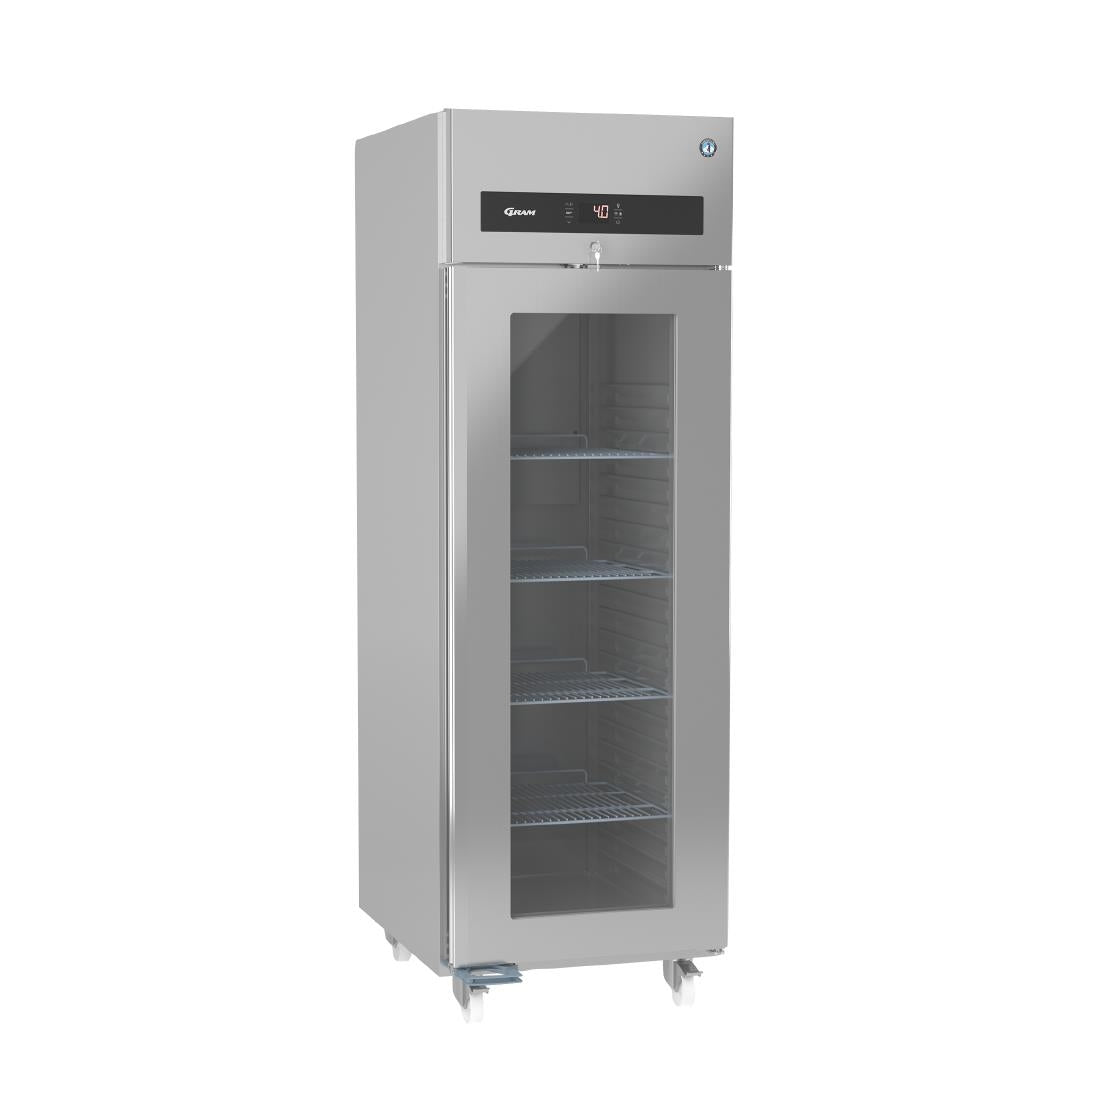 CZ232 Hoshizaki Premier Single Glass Door Refrigerator 2/1 Gastronorm KG70CDRU JD Catering Equipment Solutions Ltd